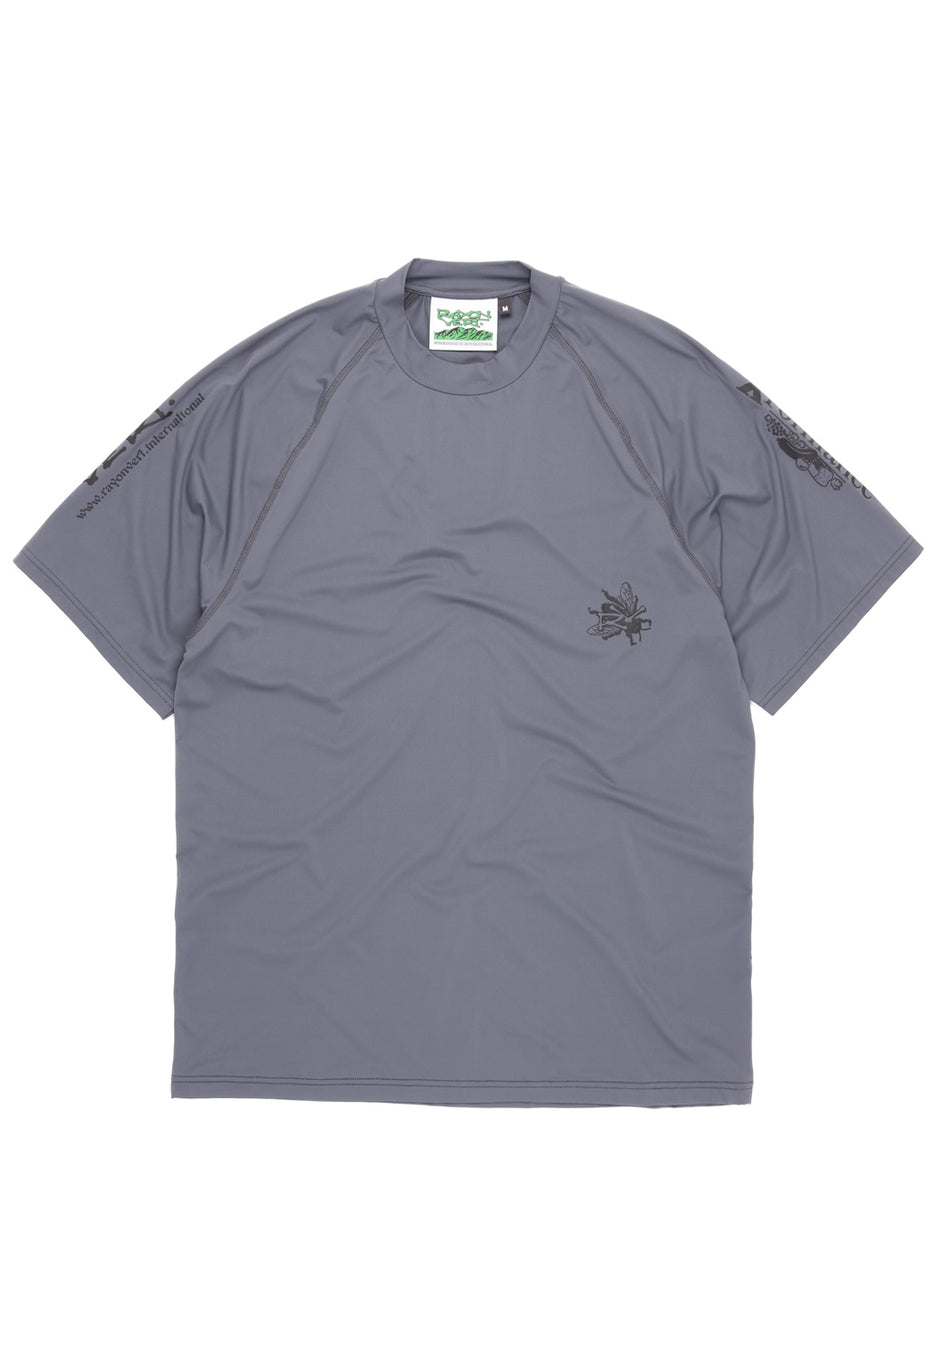 Rayon Vert Men's Miles T-Shirt - Cave Grey